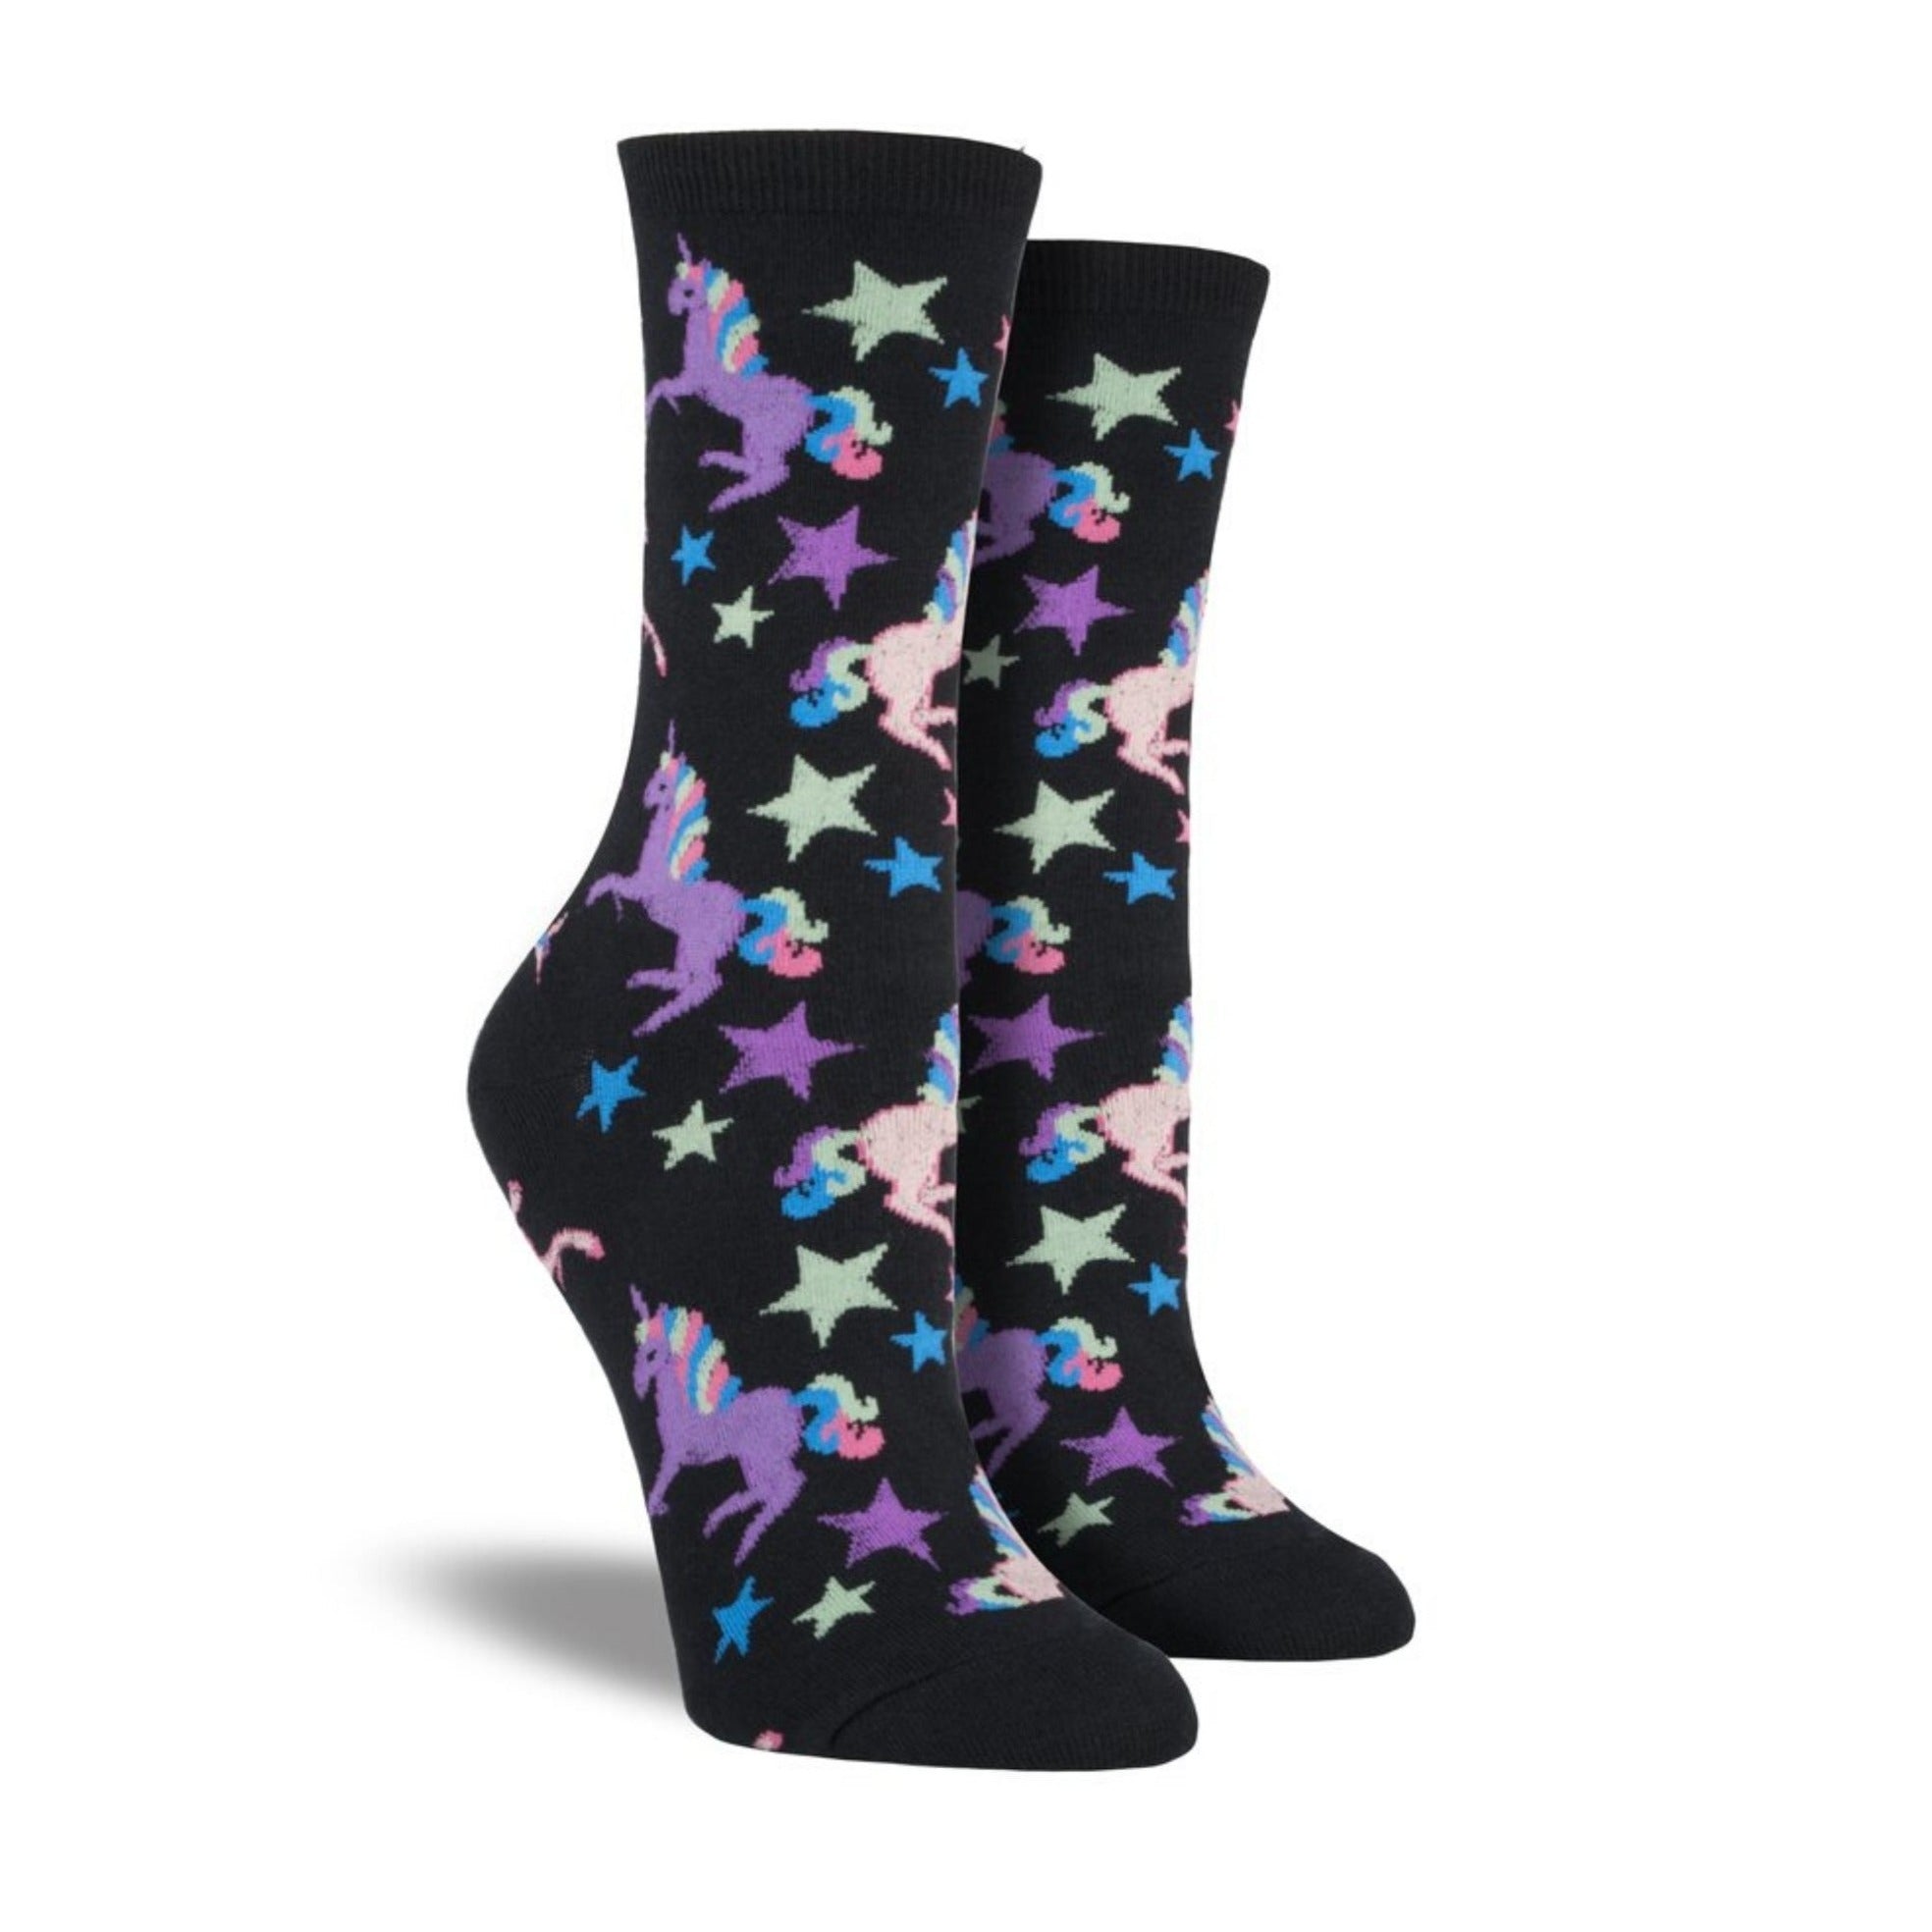 Black socks with purple and pink unicorns and stars